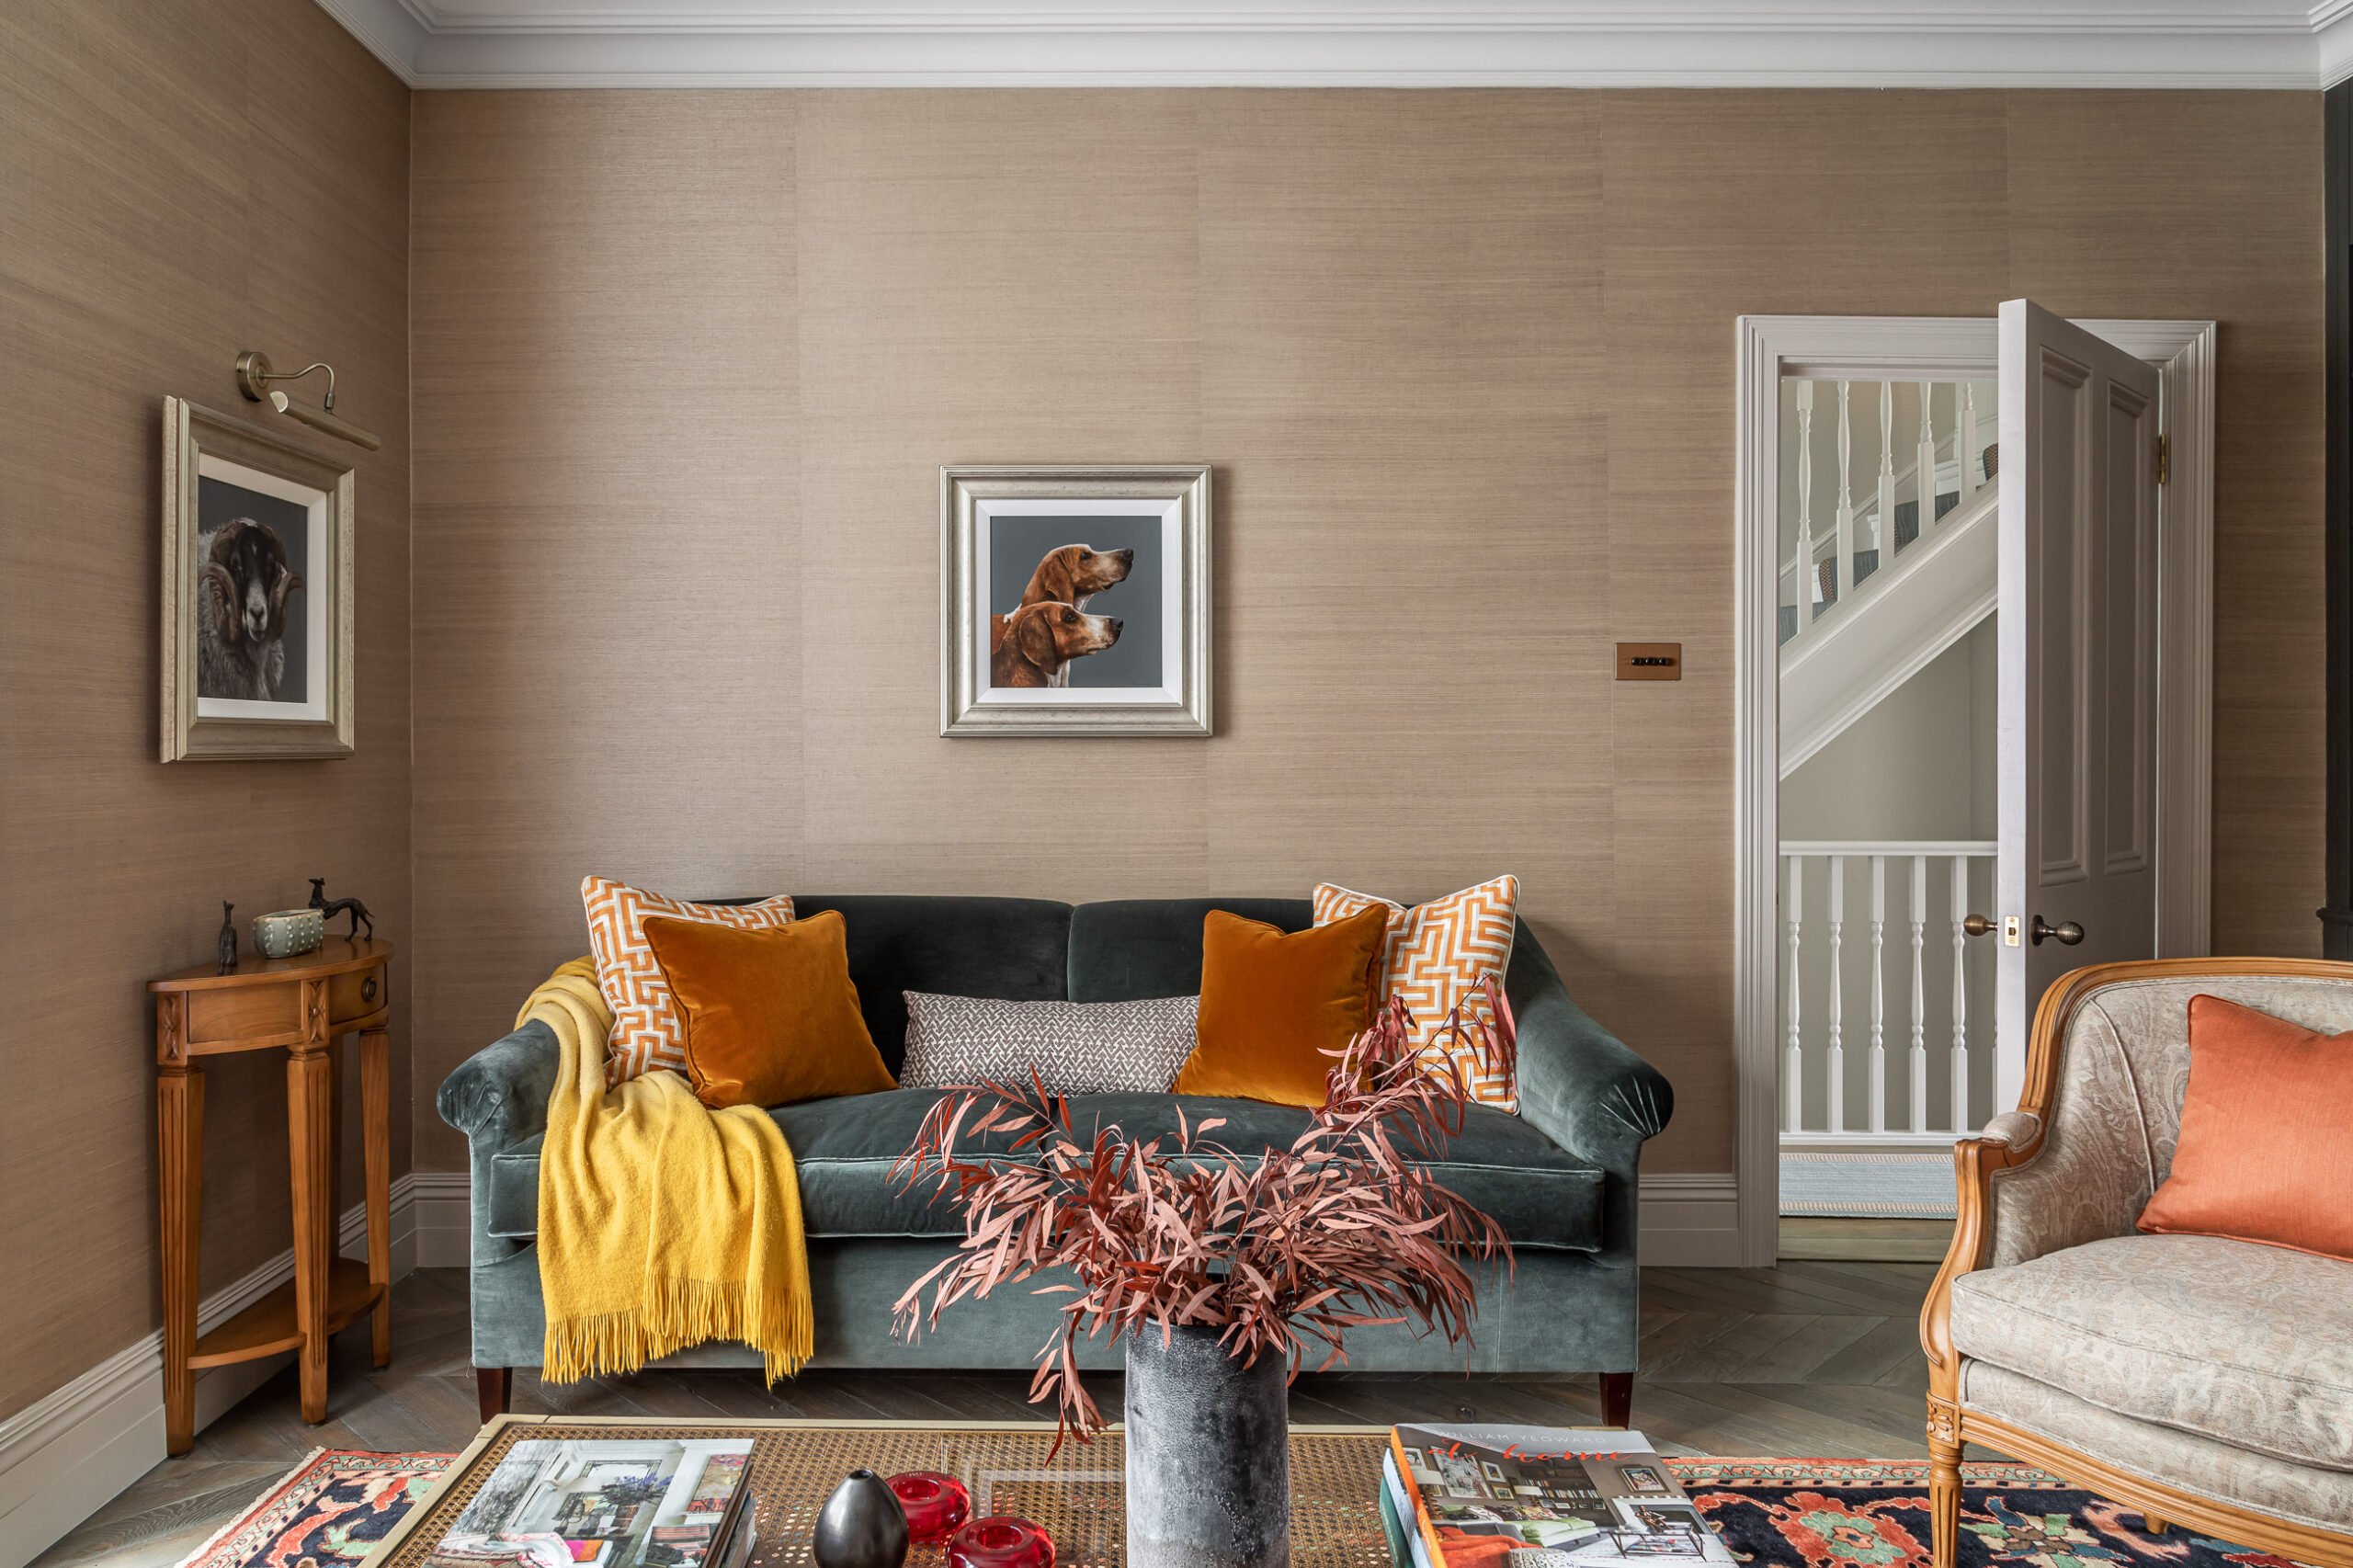 Vibrant textured living room interior renovation